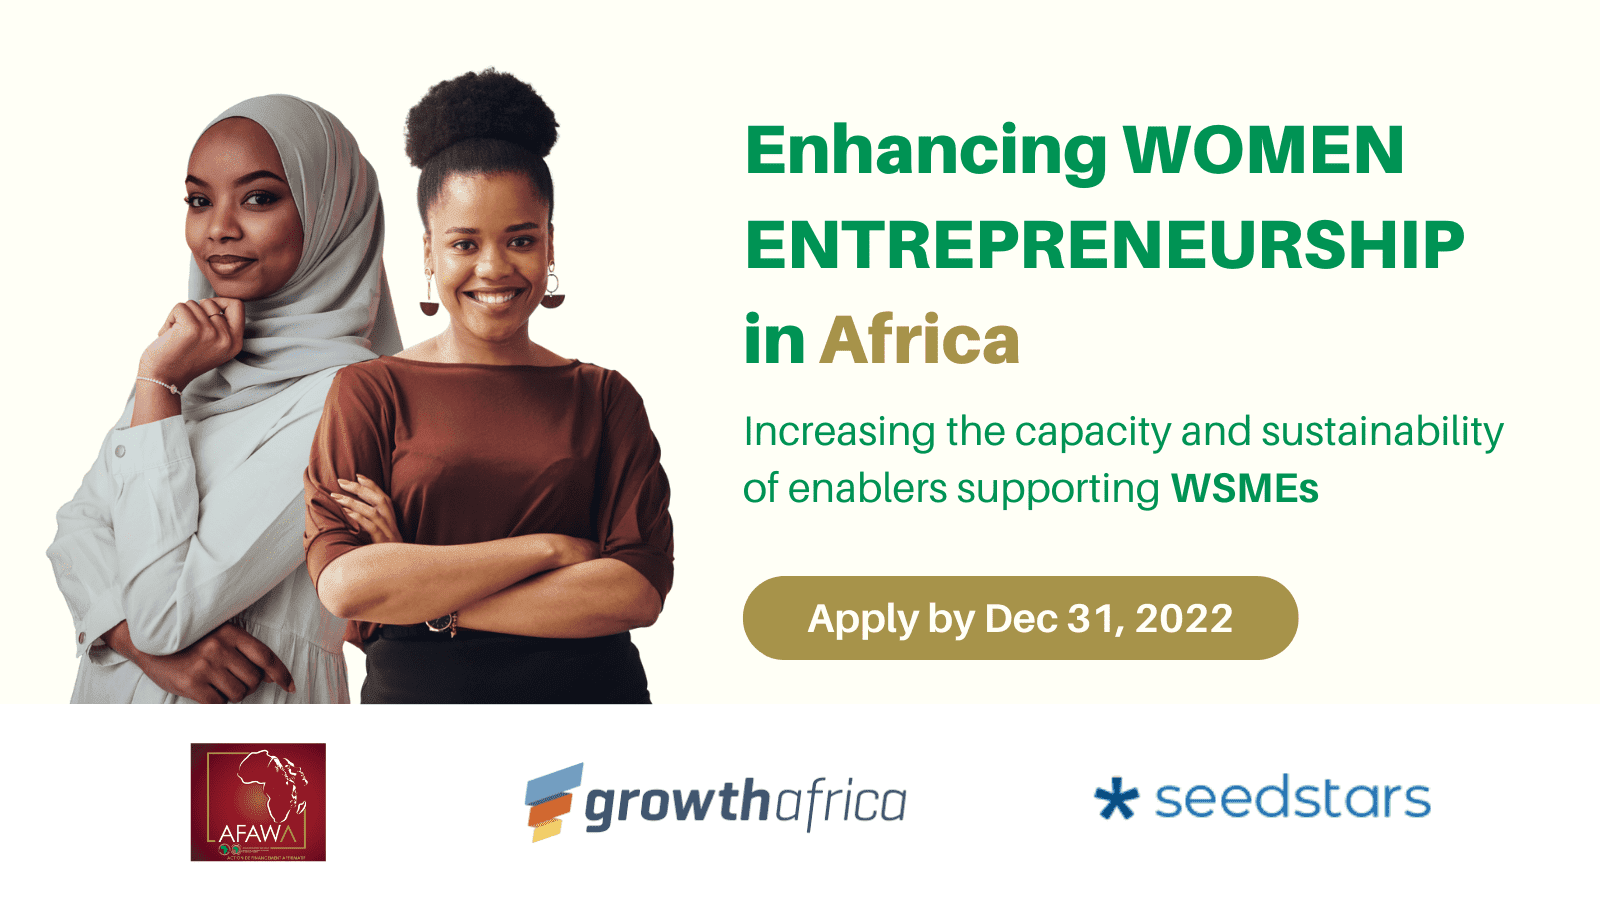 Seedstars launches EWEA program to support women entrepreneurs in Africa